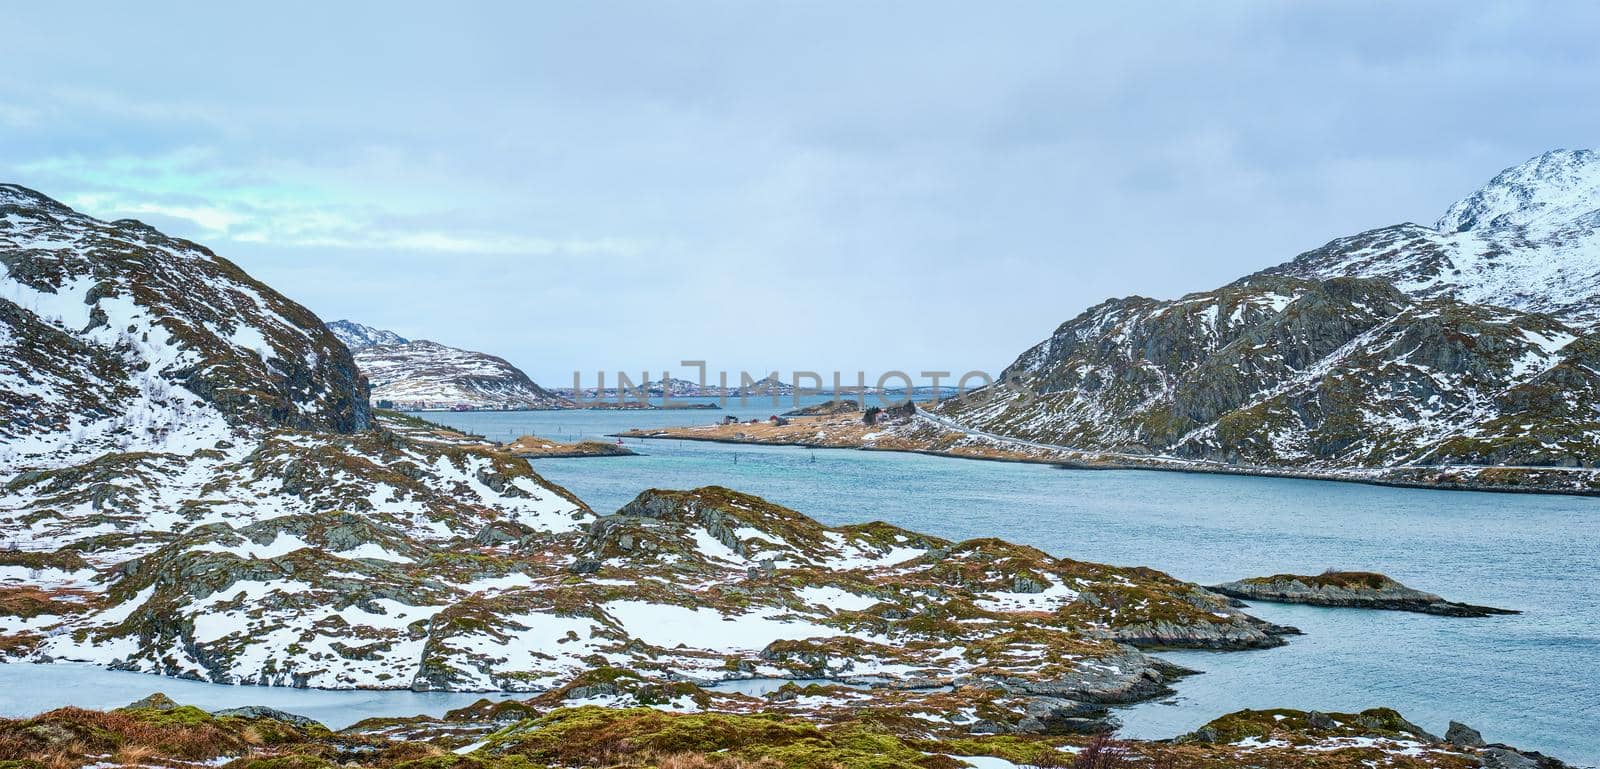 Panorama of norwegian fjord, Lofoten islands, Norway by dimol